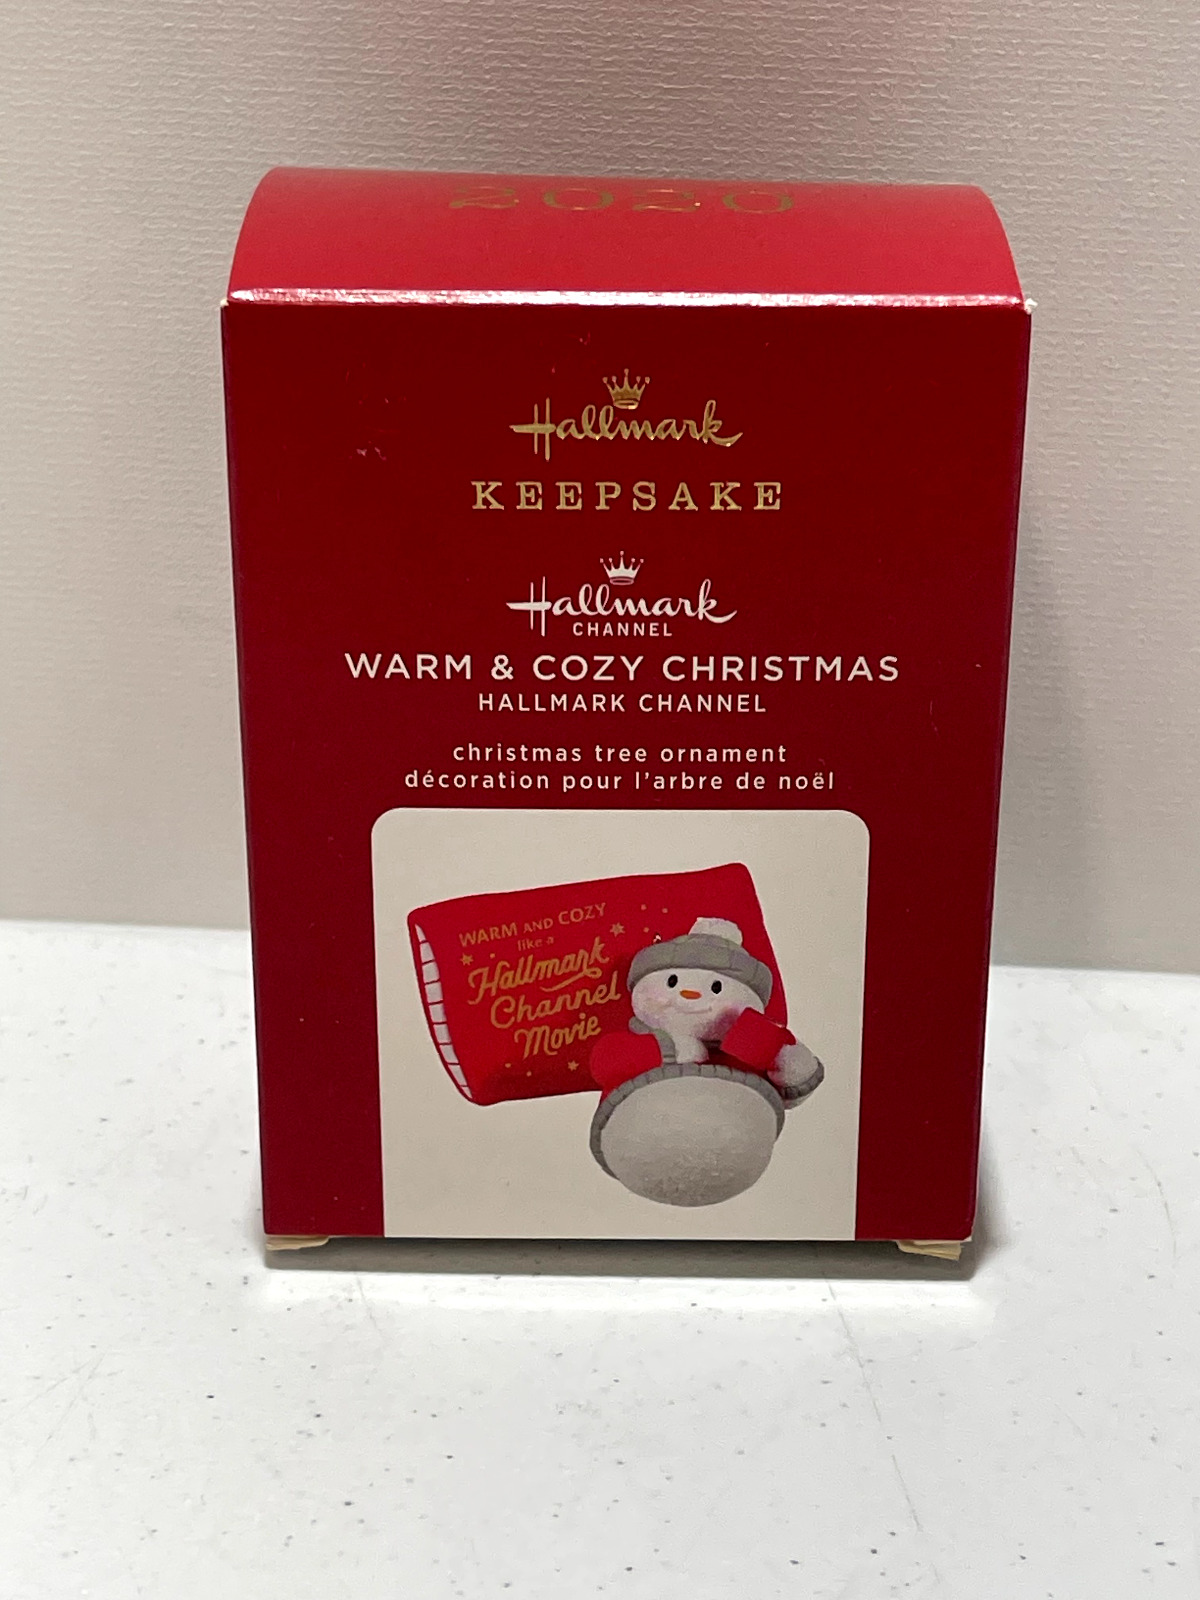 New 2020 Hallmark Warm & Cozy Christmas Keepsake Ornament-Hallmark Channel Movie